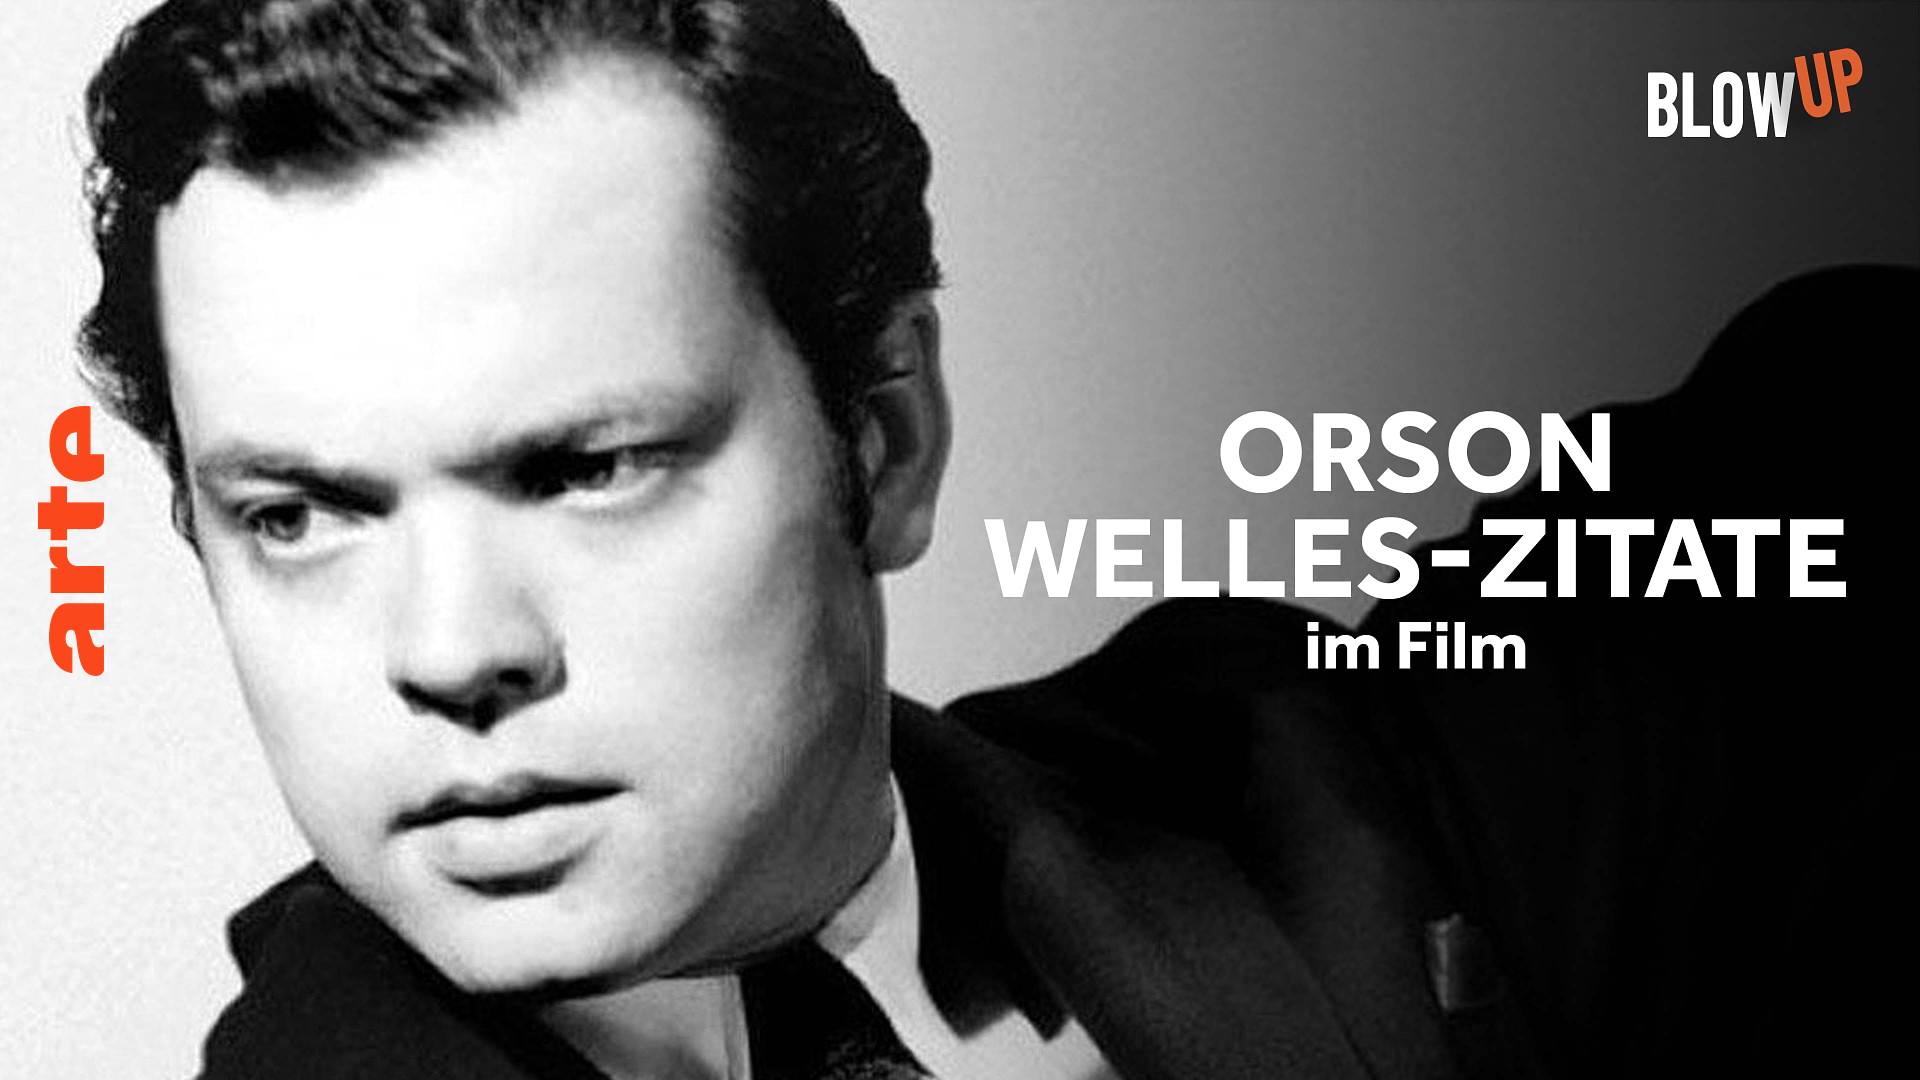 Blow up - Orson Welles-Zitate im Film